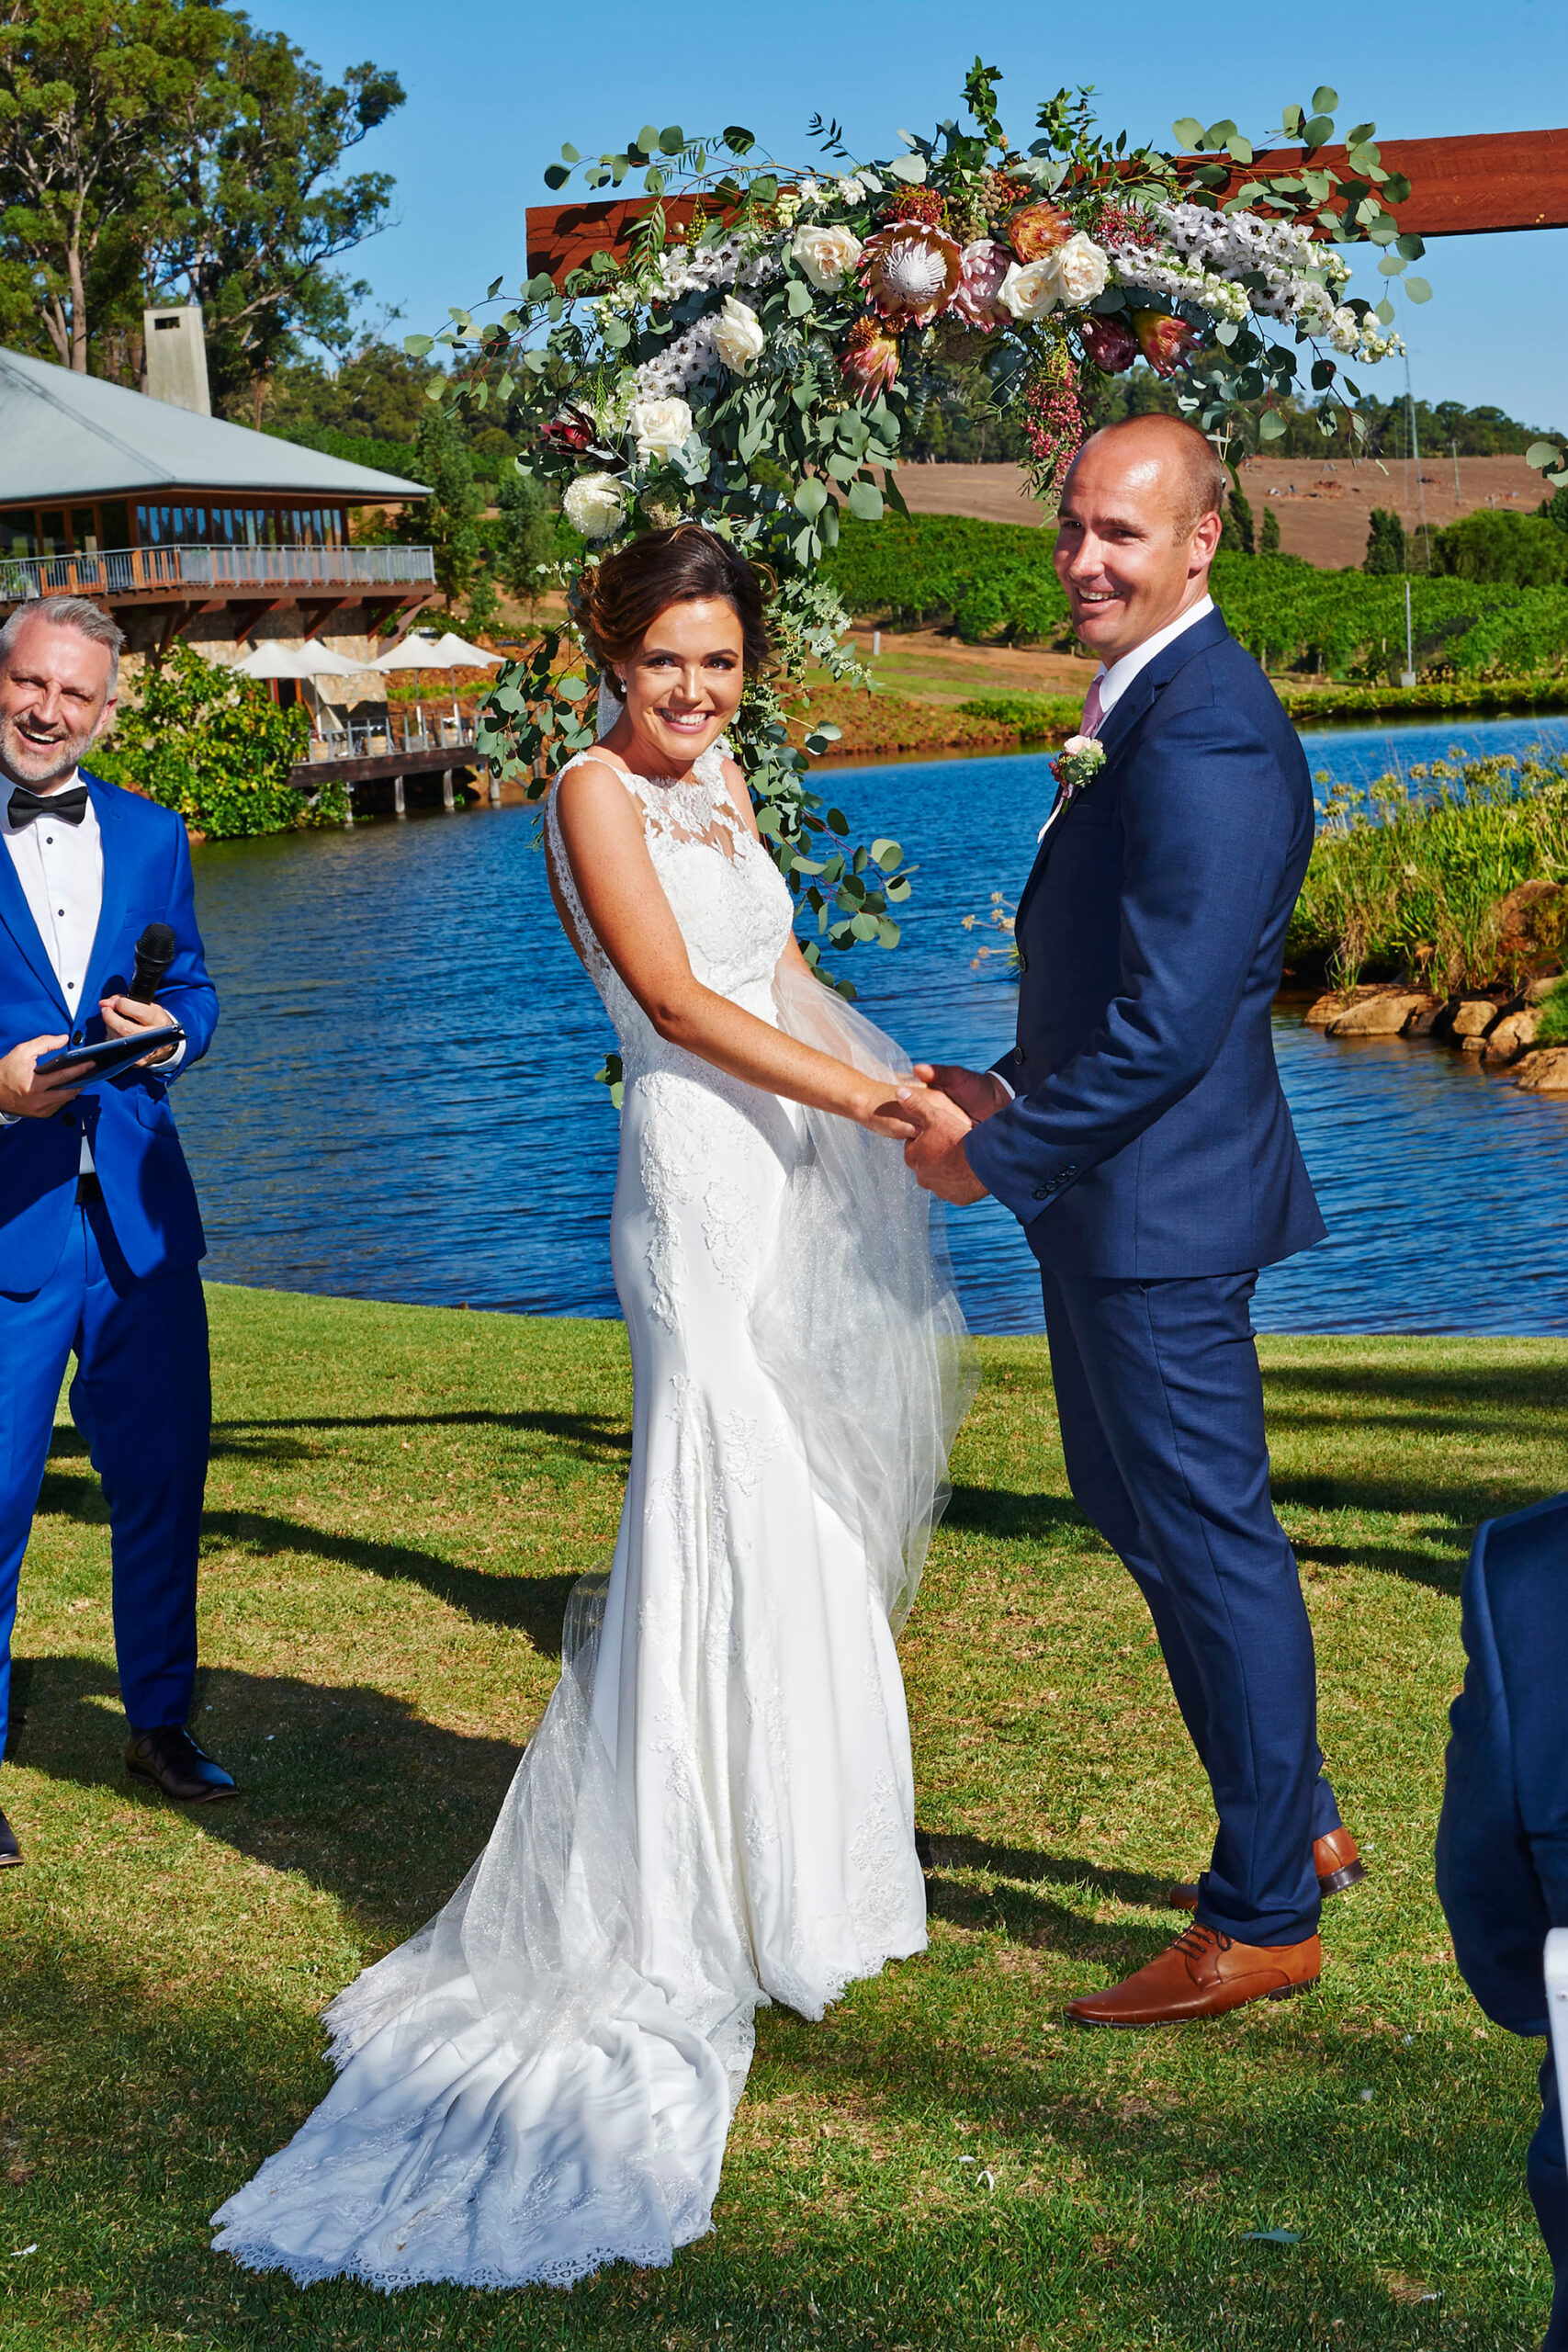 Adelaide_Ben_Rustic-Vineyard-Wedding_Peter-Edwards-Photography_SBS_012